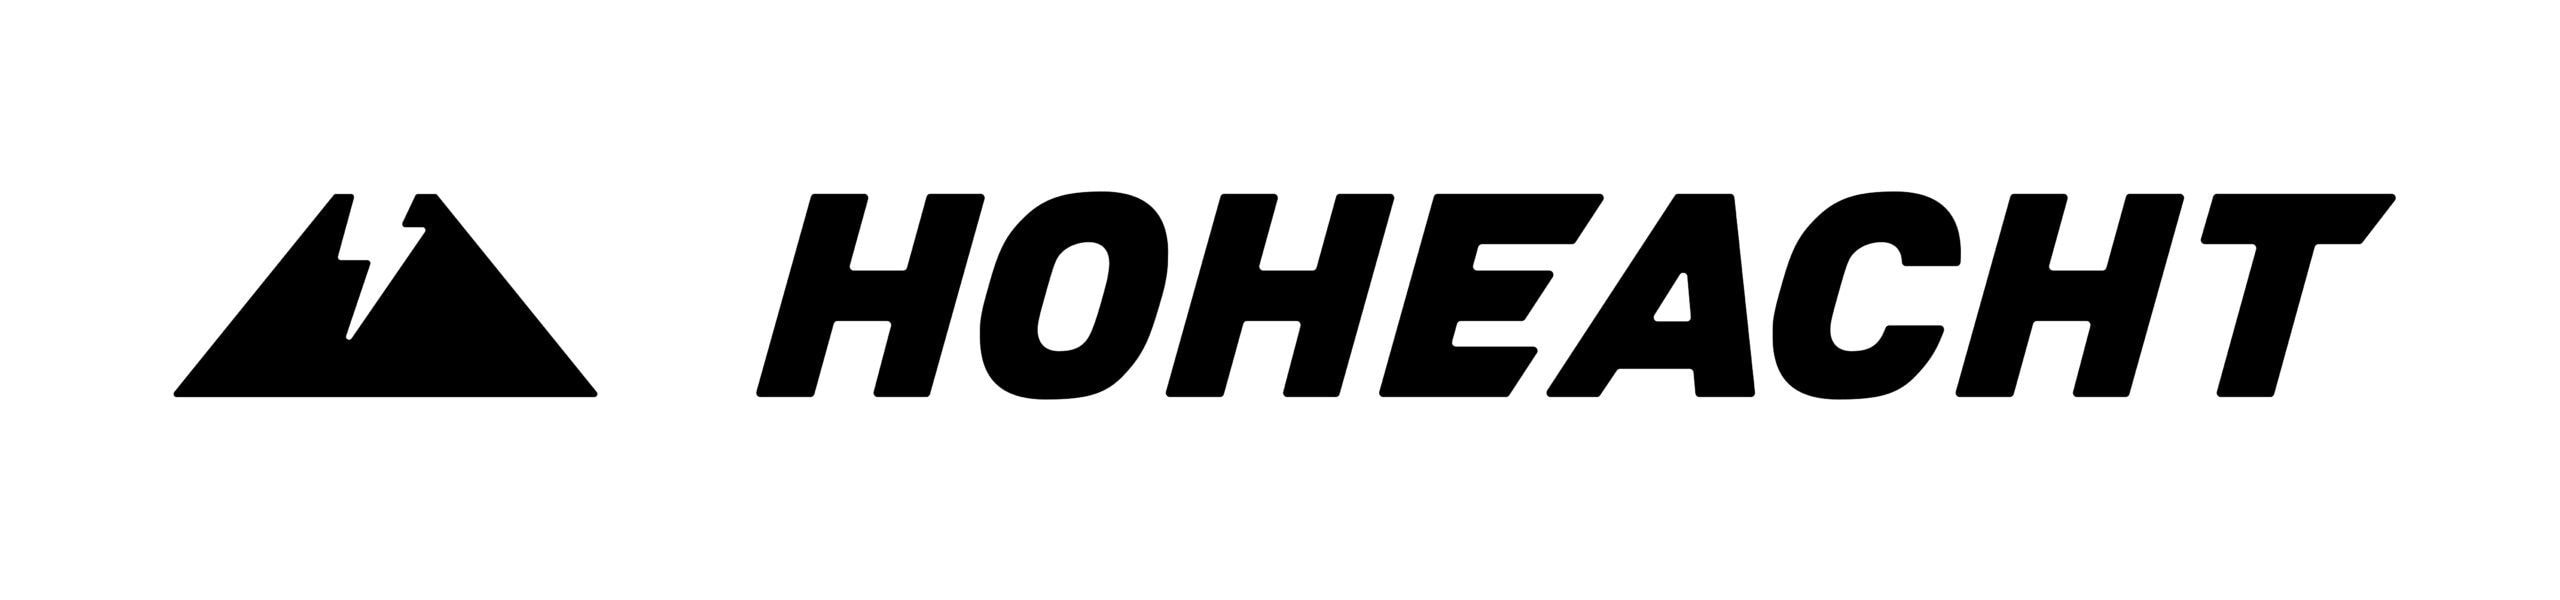 Hohe Acht Logoset 2021 01